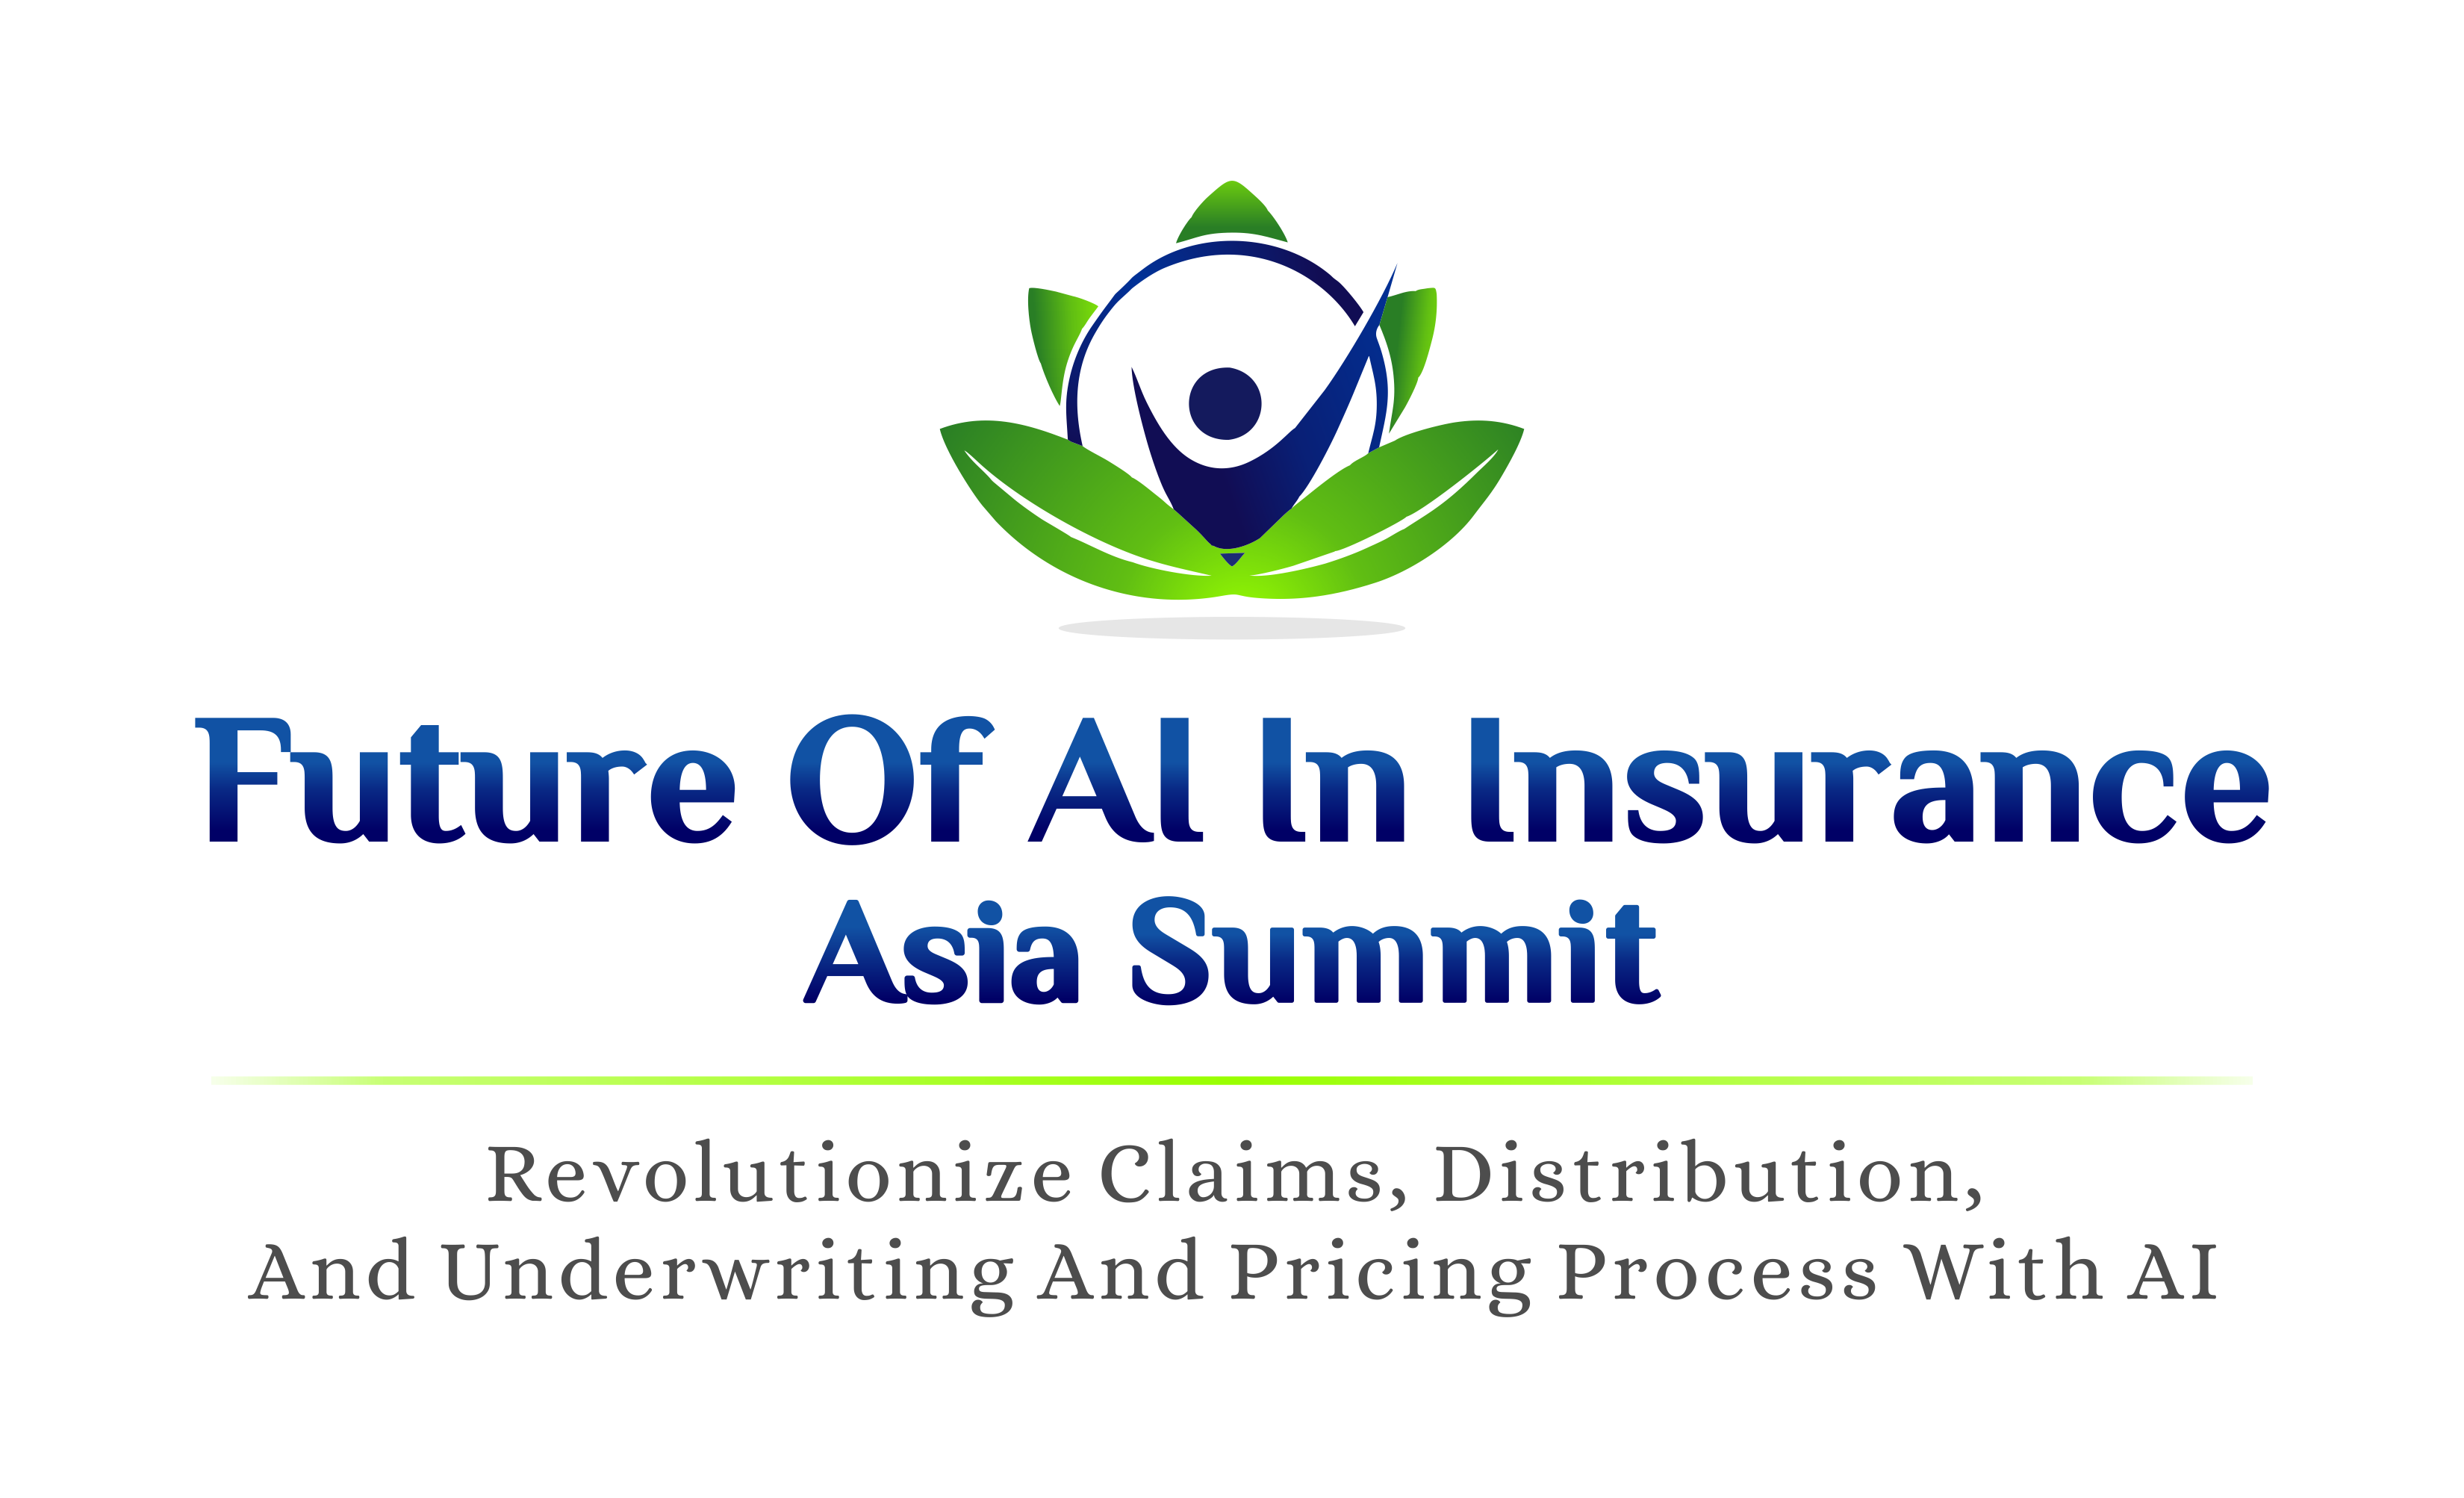 Future of AI in Insurance Asia Summit